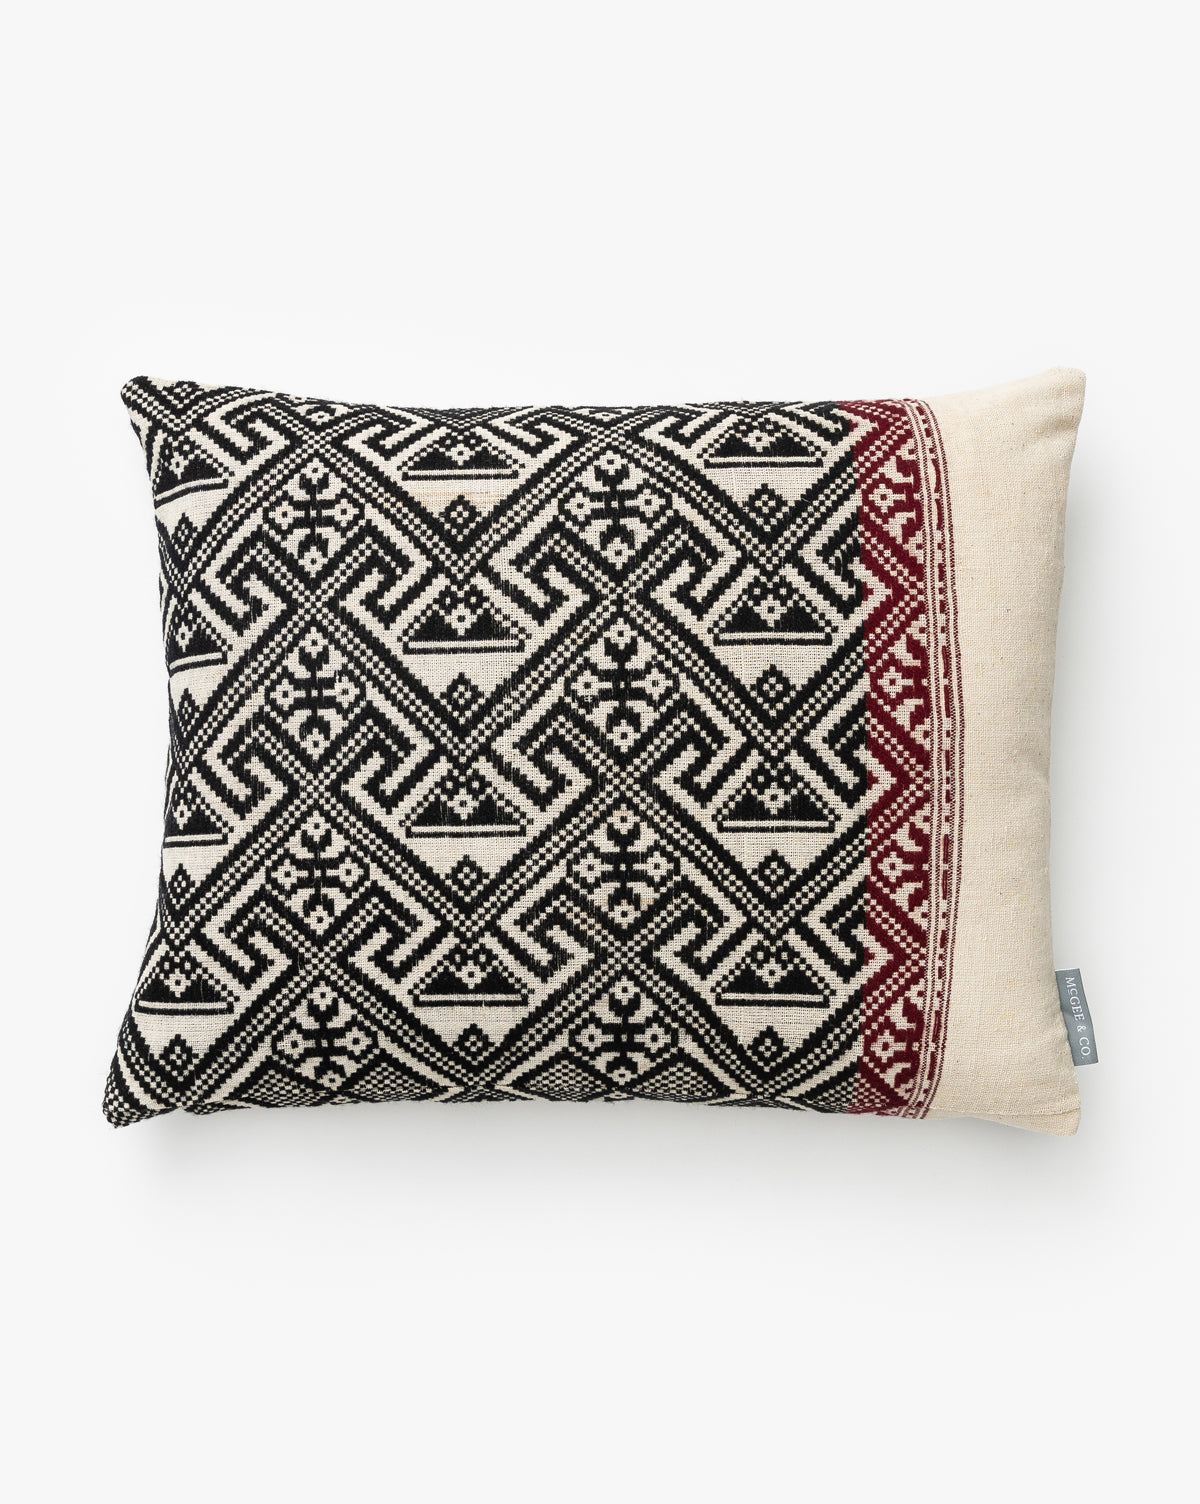 Tangren, Vintage Black Tribal Print Pillow Cover No. 2